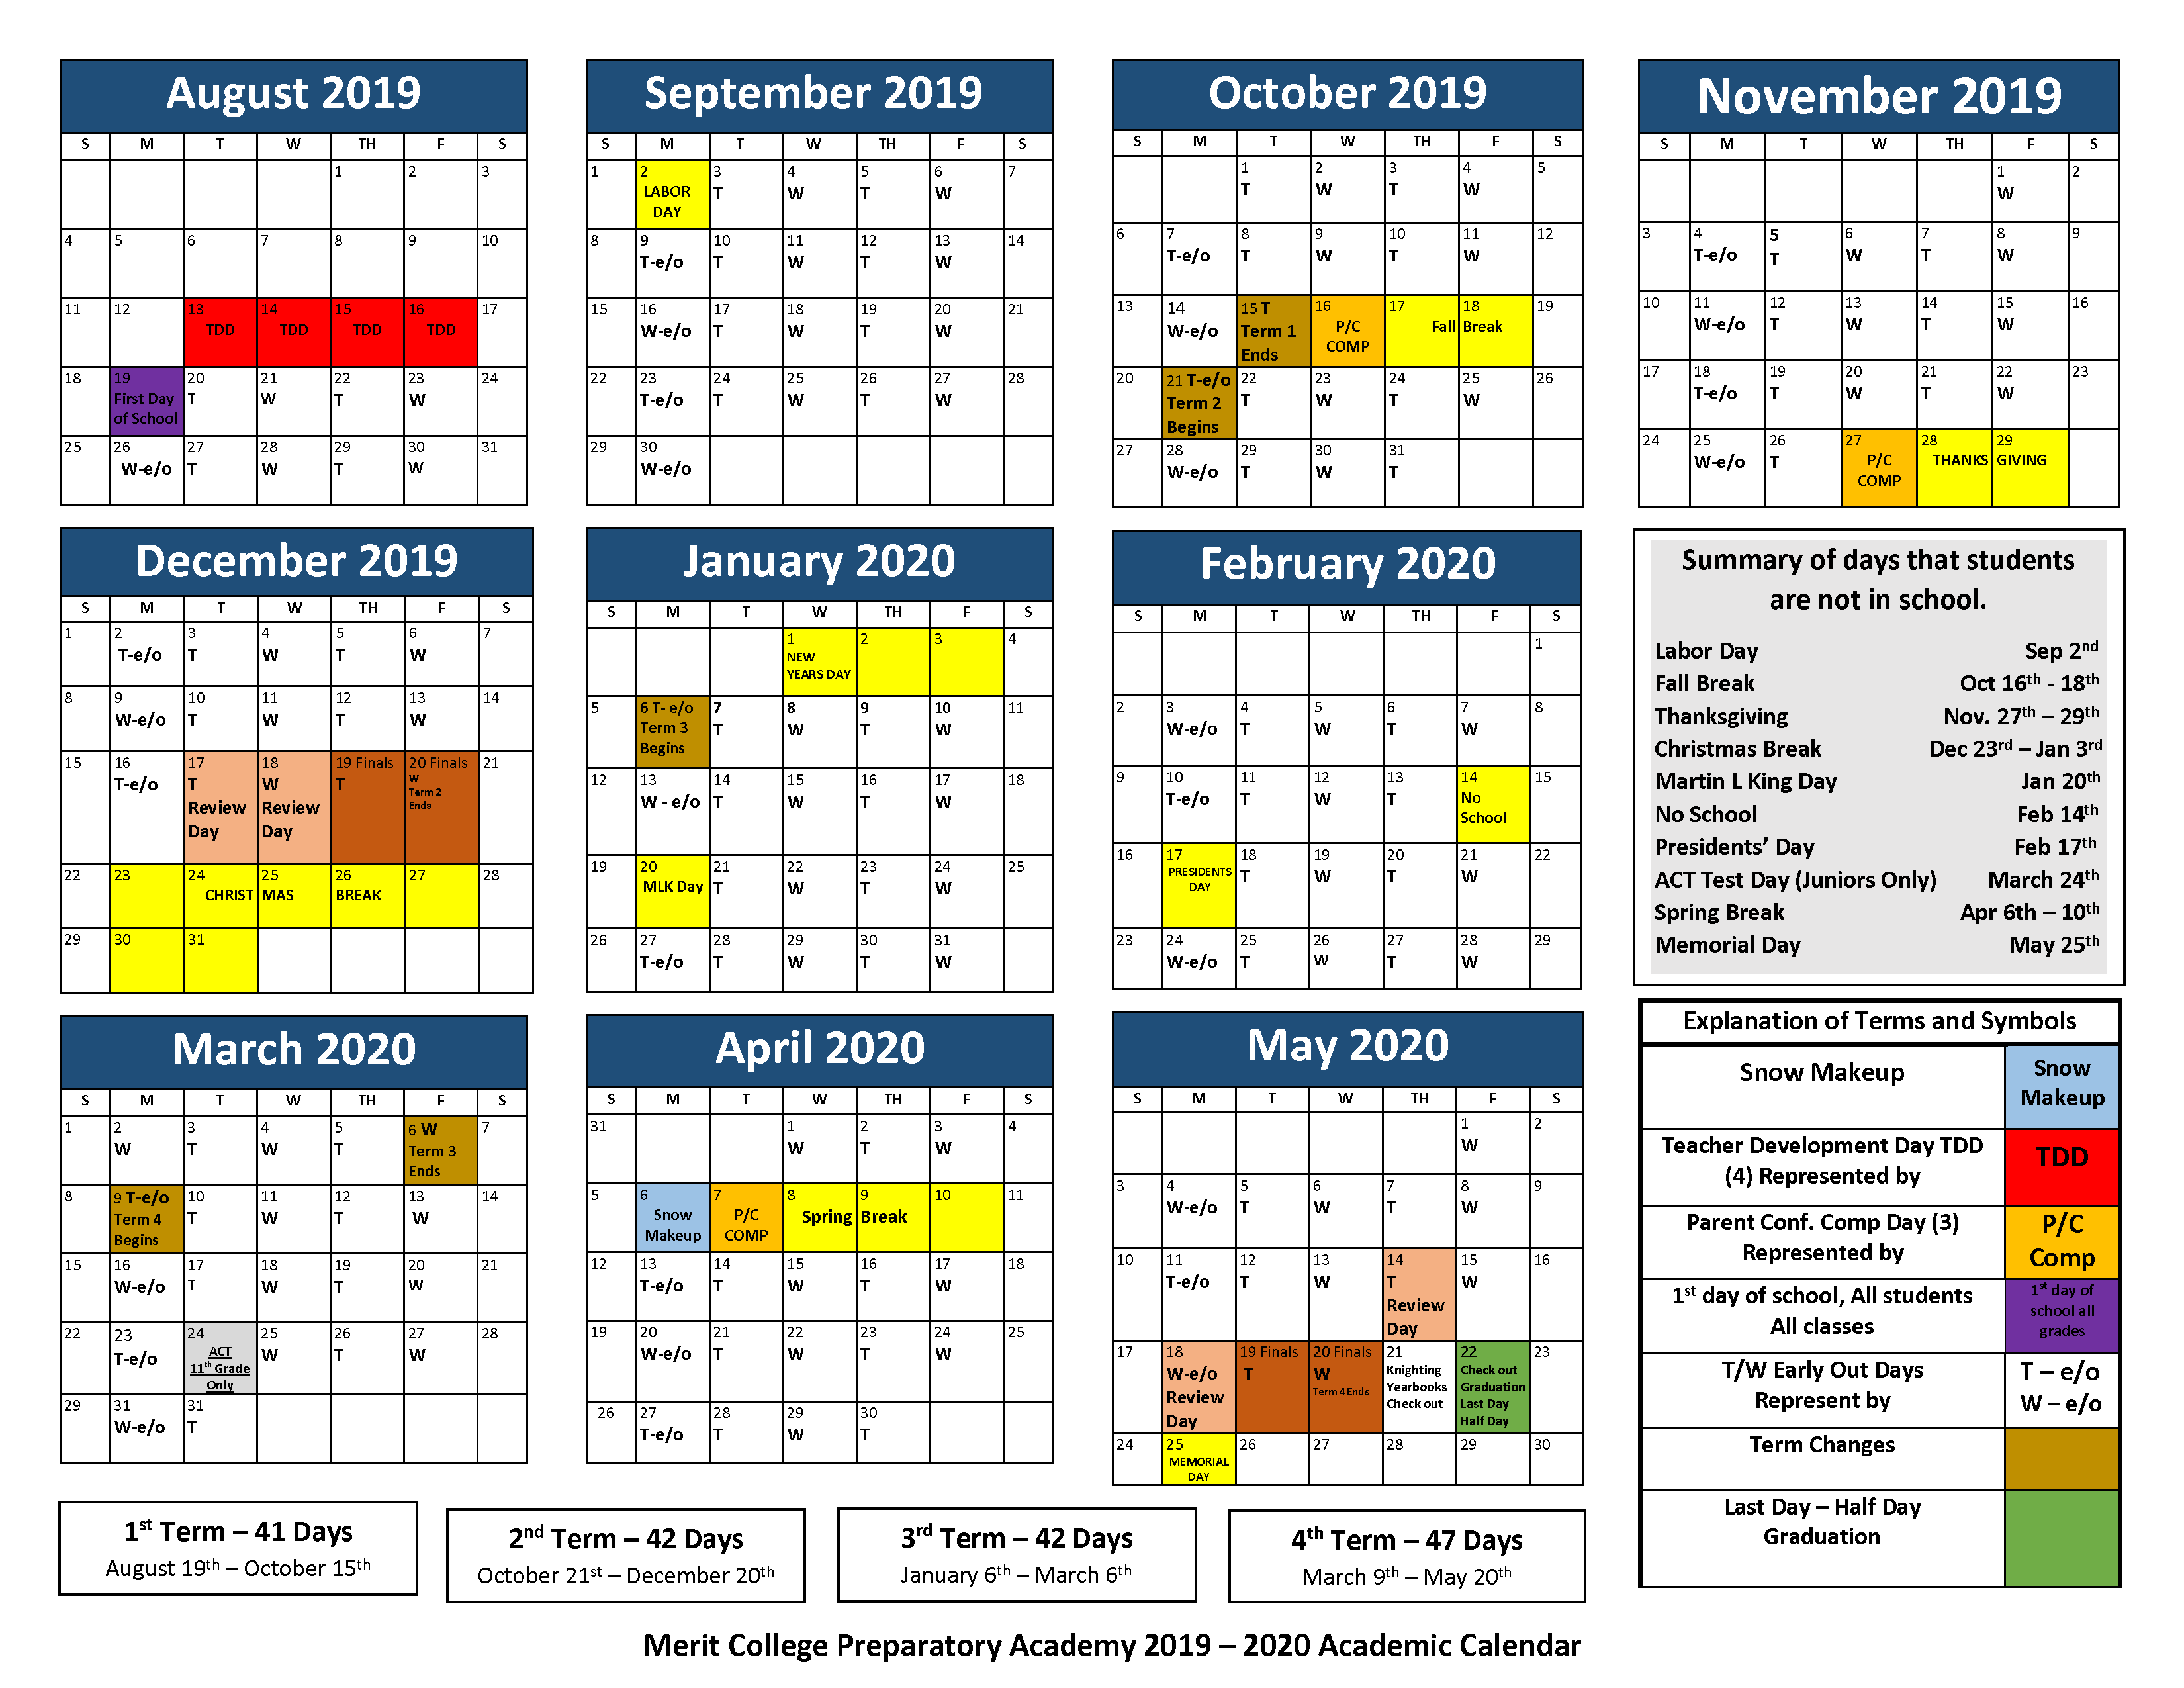 Merit Academy Academic Calendar